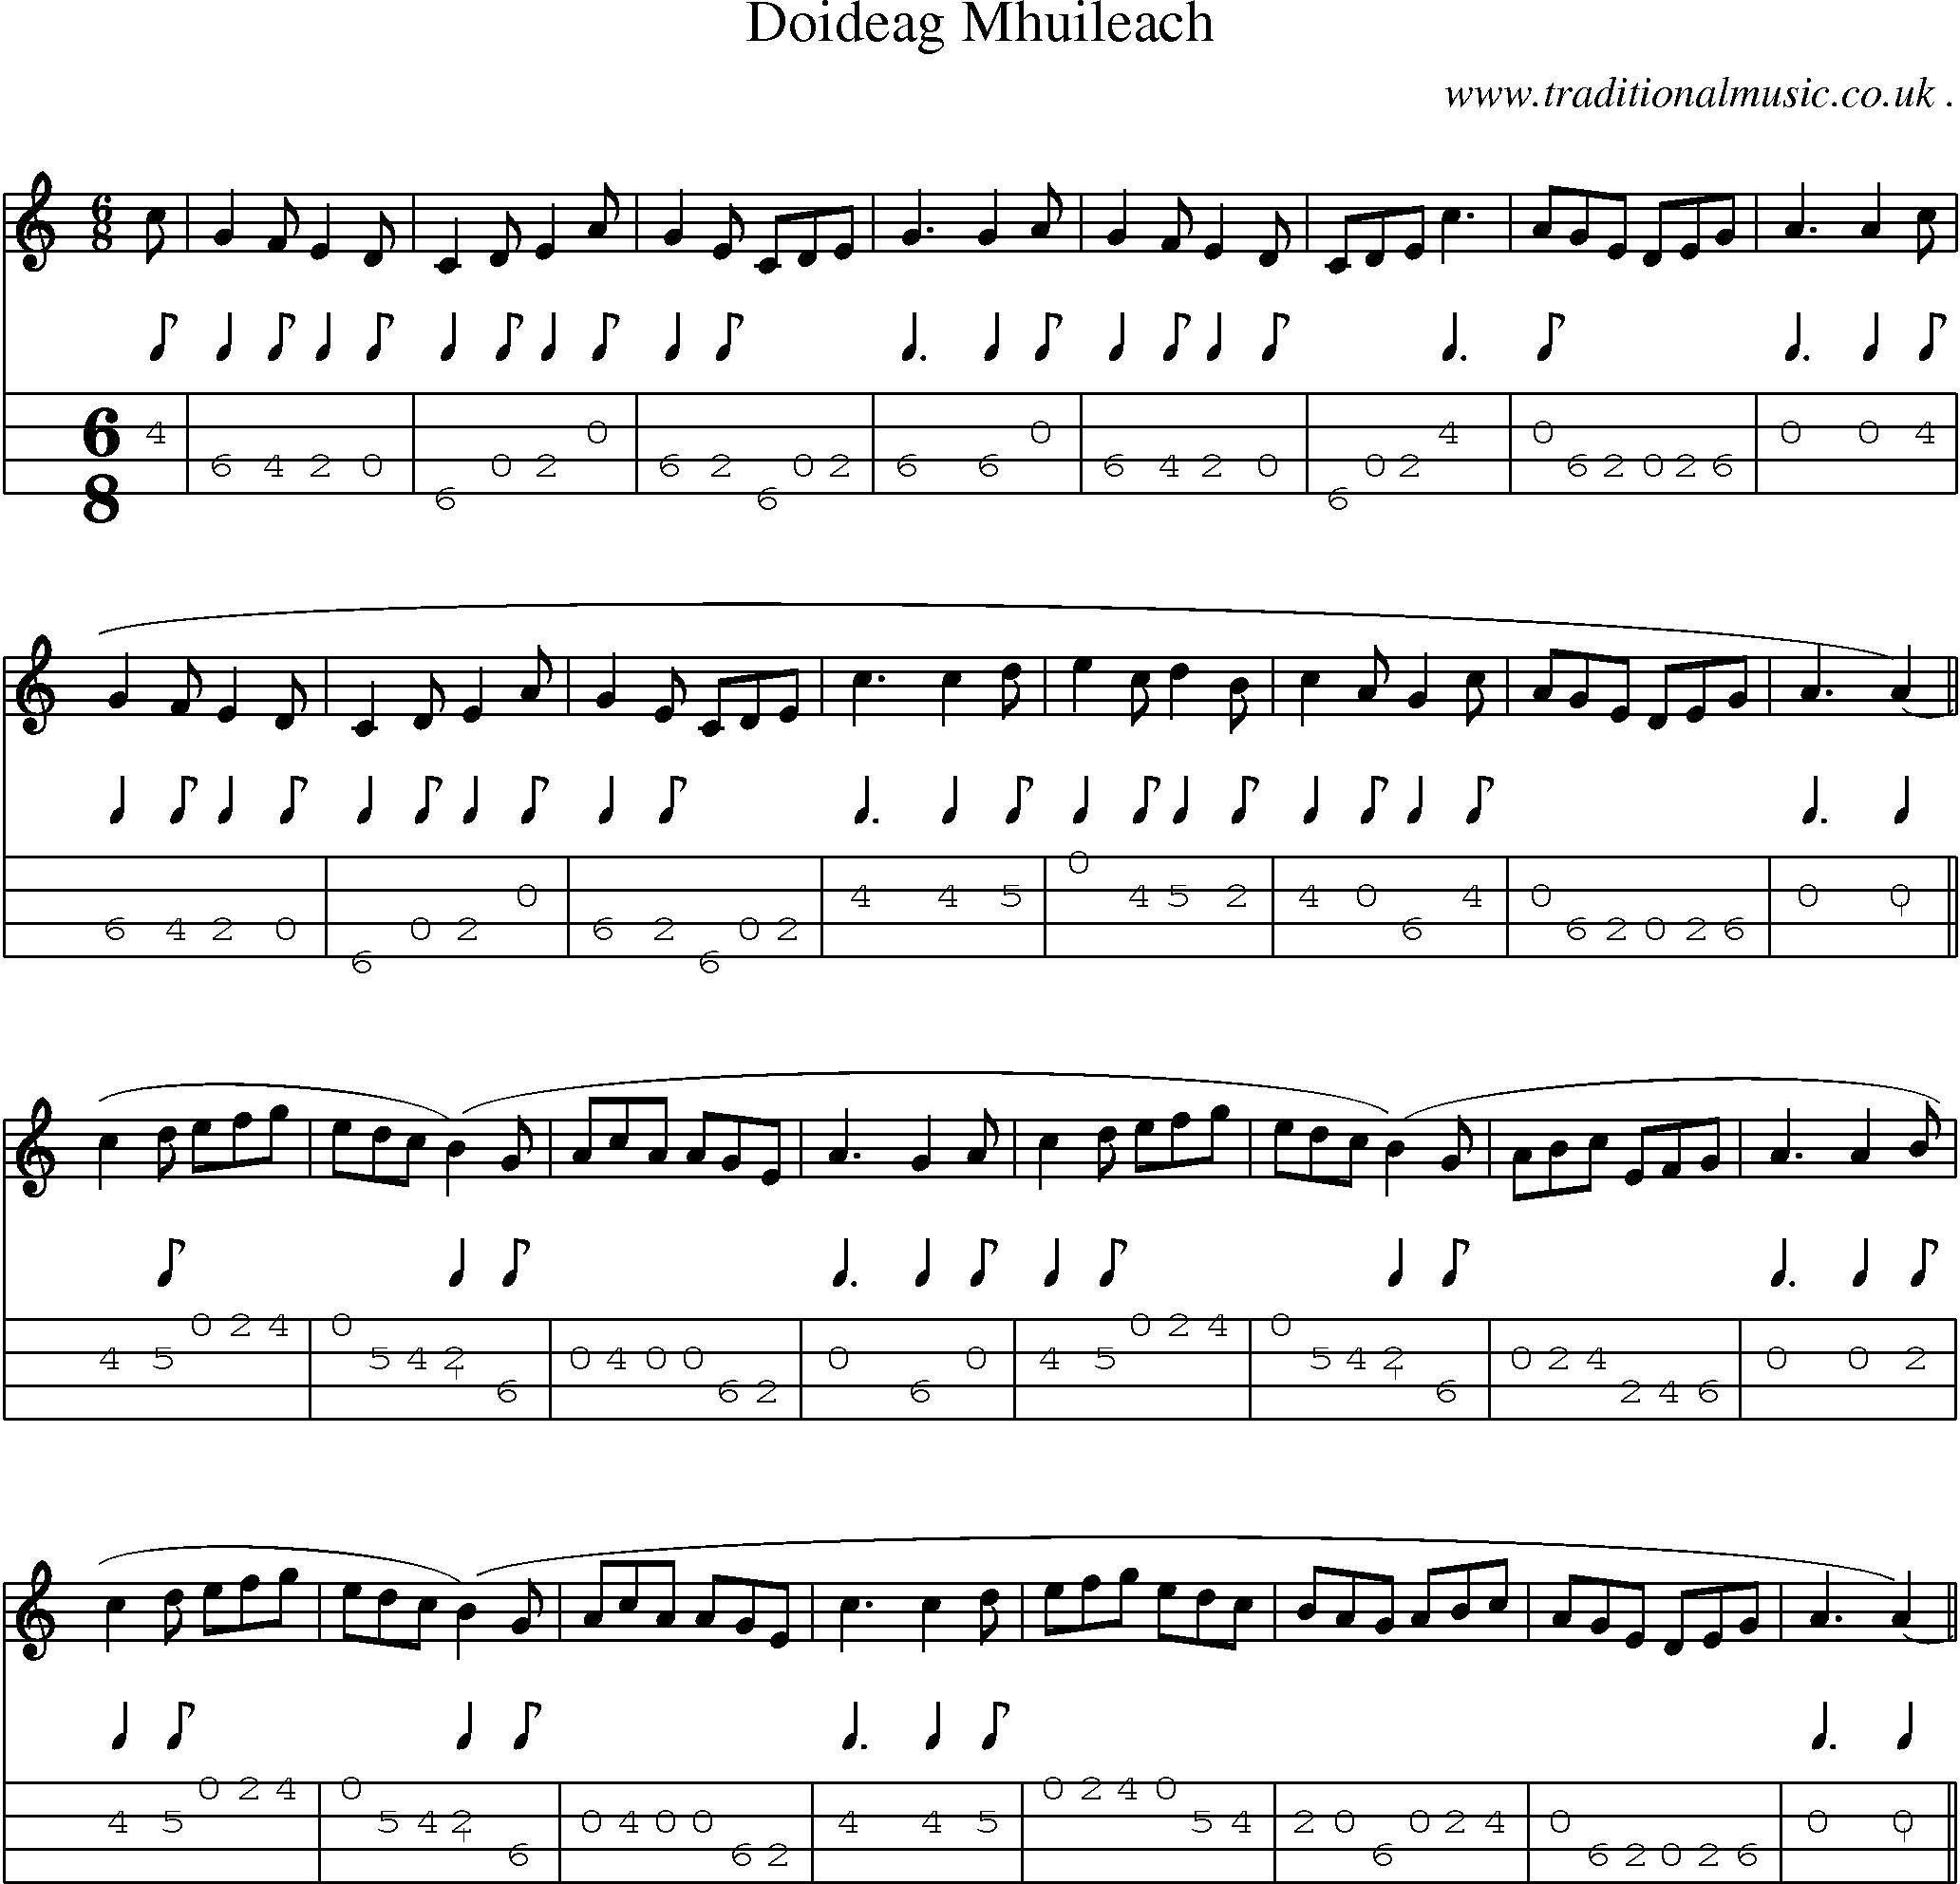 Sheet-Music and Mandolin Tabs for Doideag Mhuileach